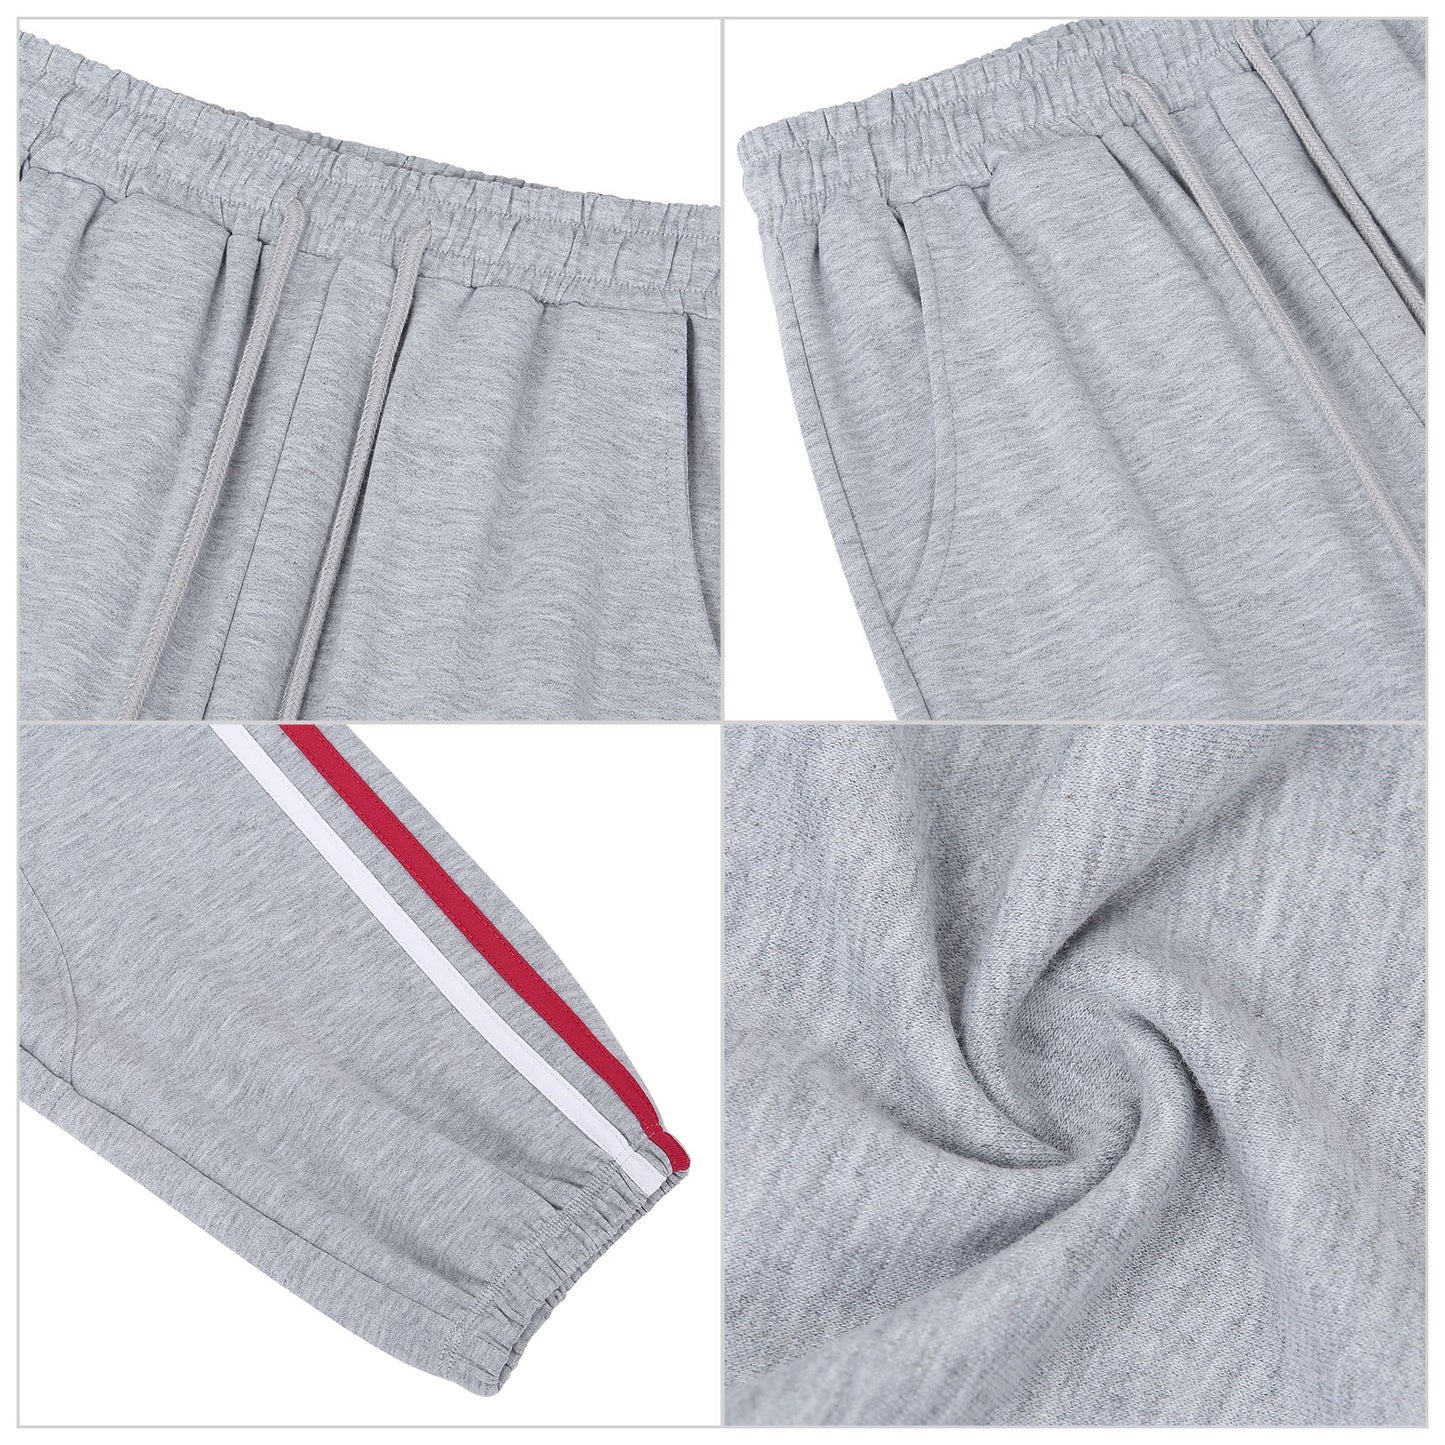 YESFASHION Women's Drawing Pockets Casual Sports Pants Grey